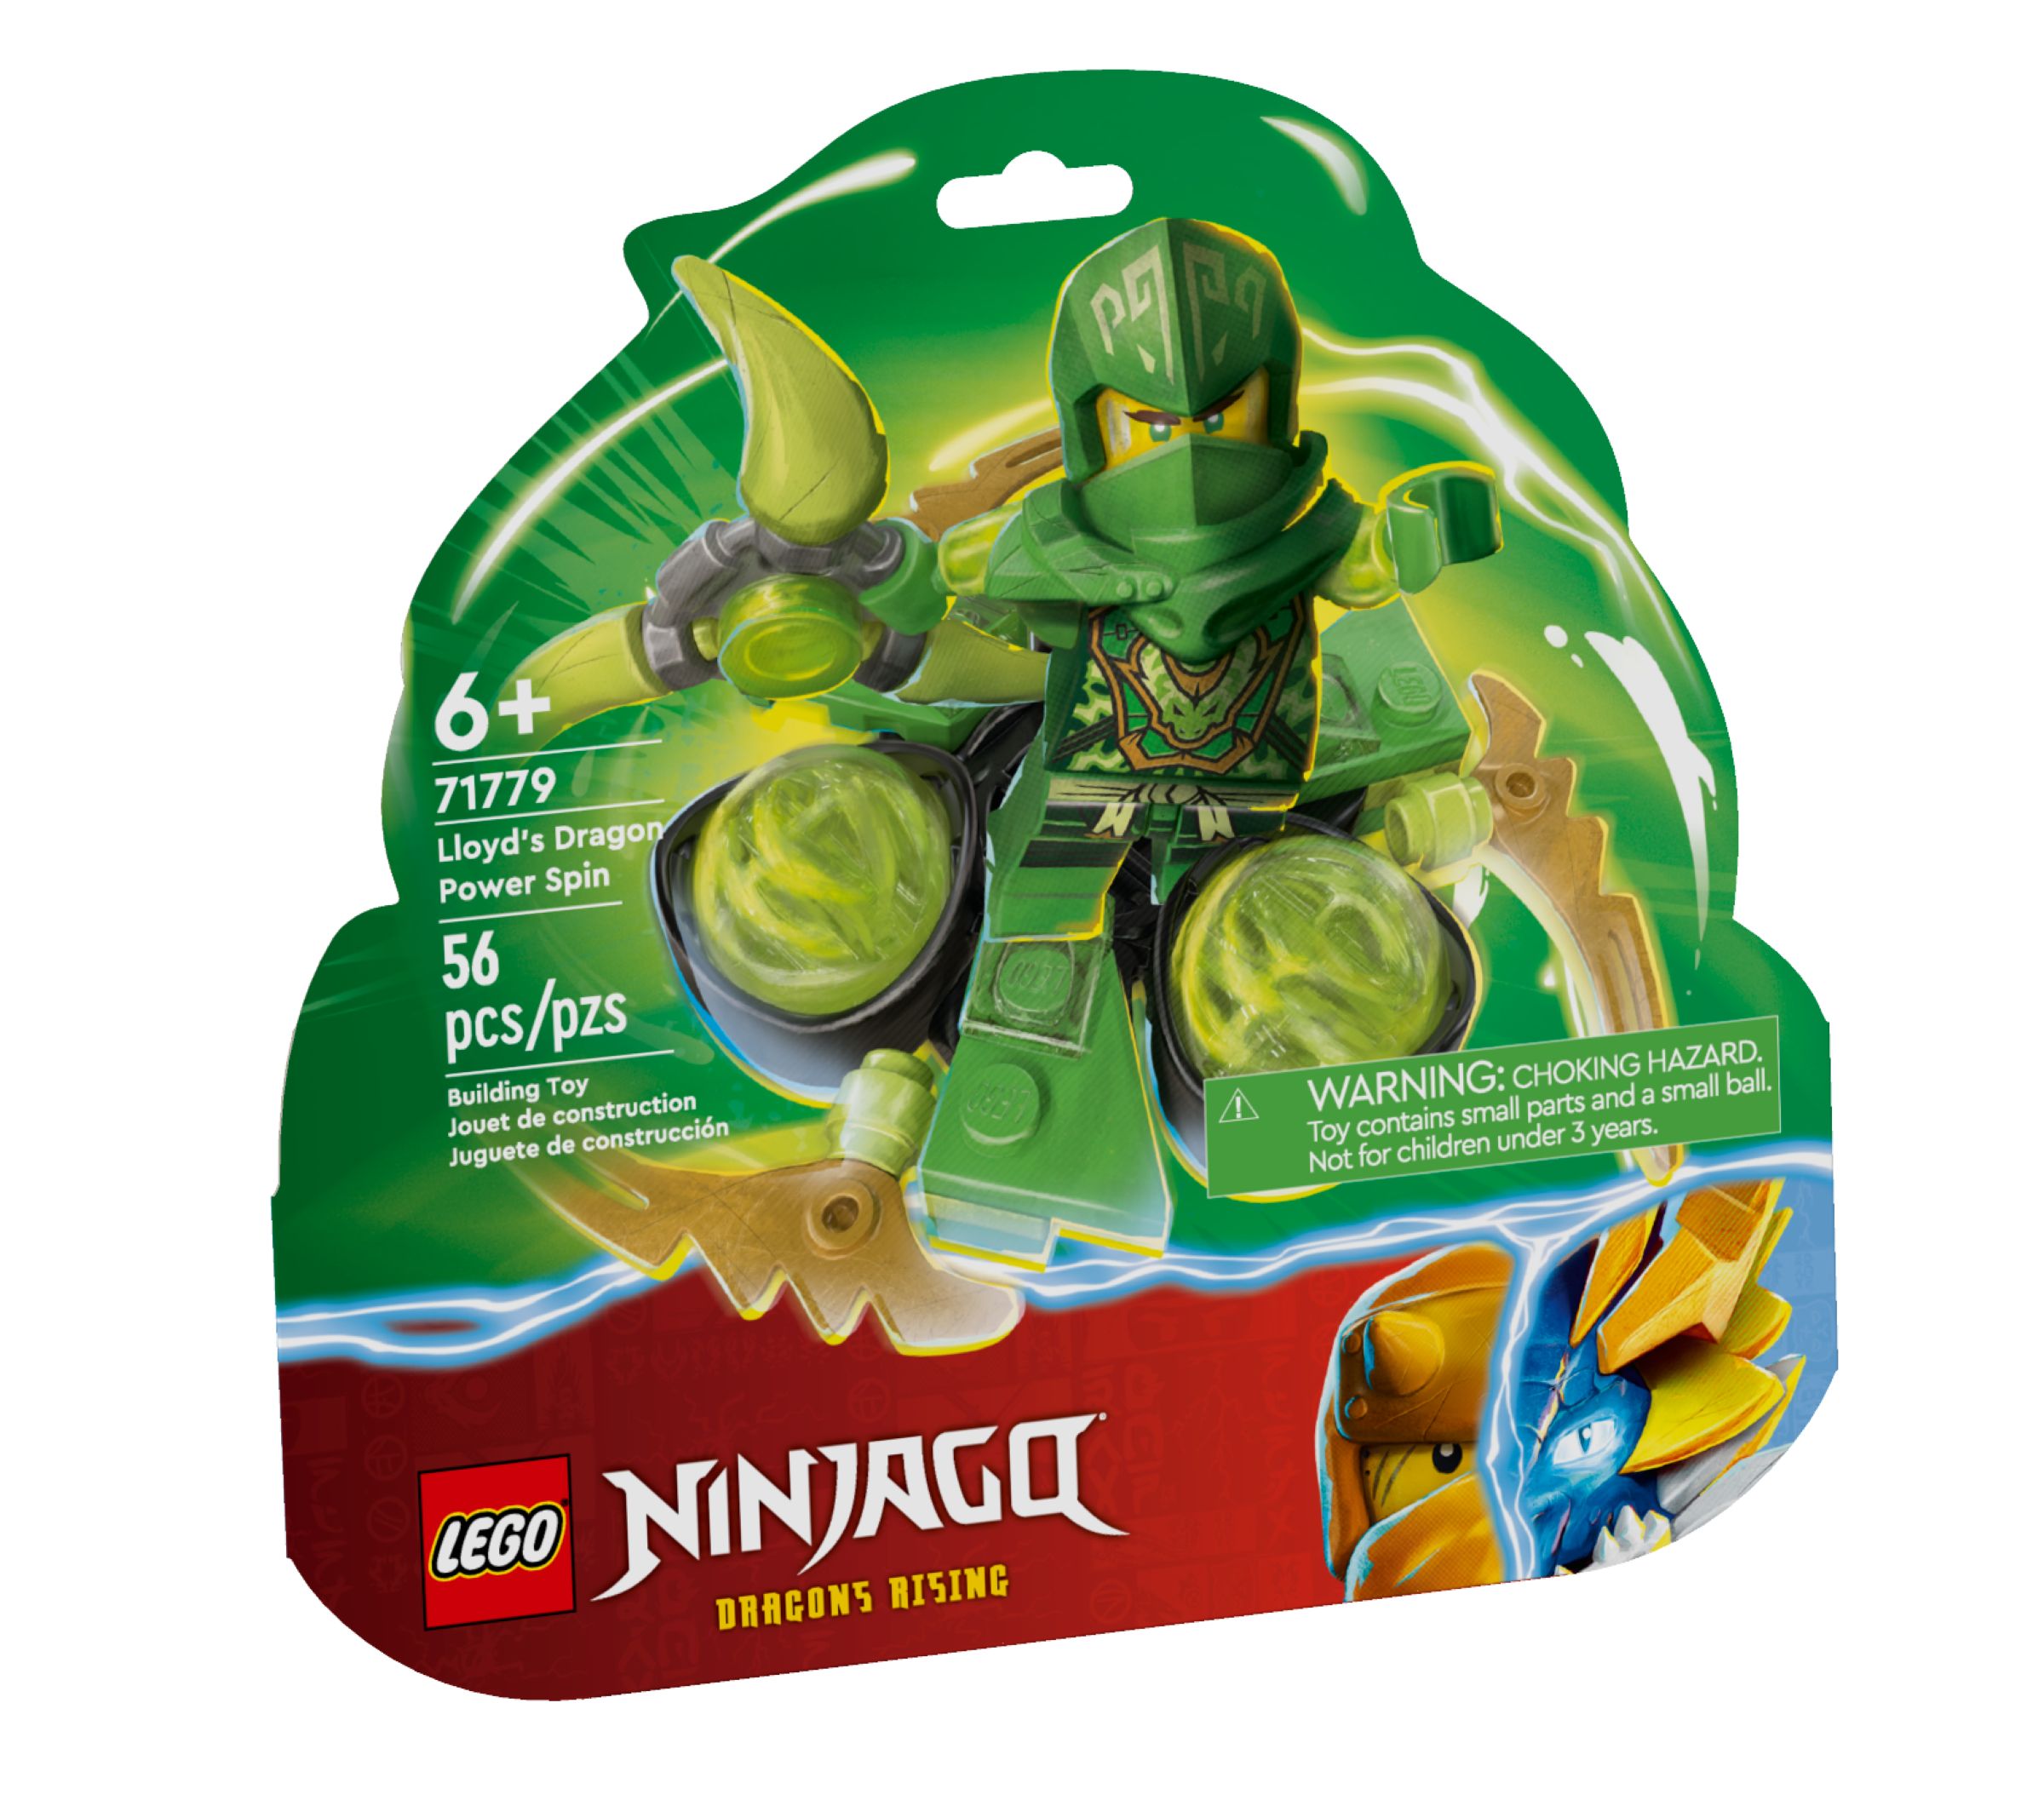 LEGO Ninjago 71779 Lloyds Drachenpower-Spinjitzu-Spin LEGO_71779_alt1.jpg